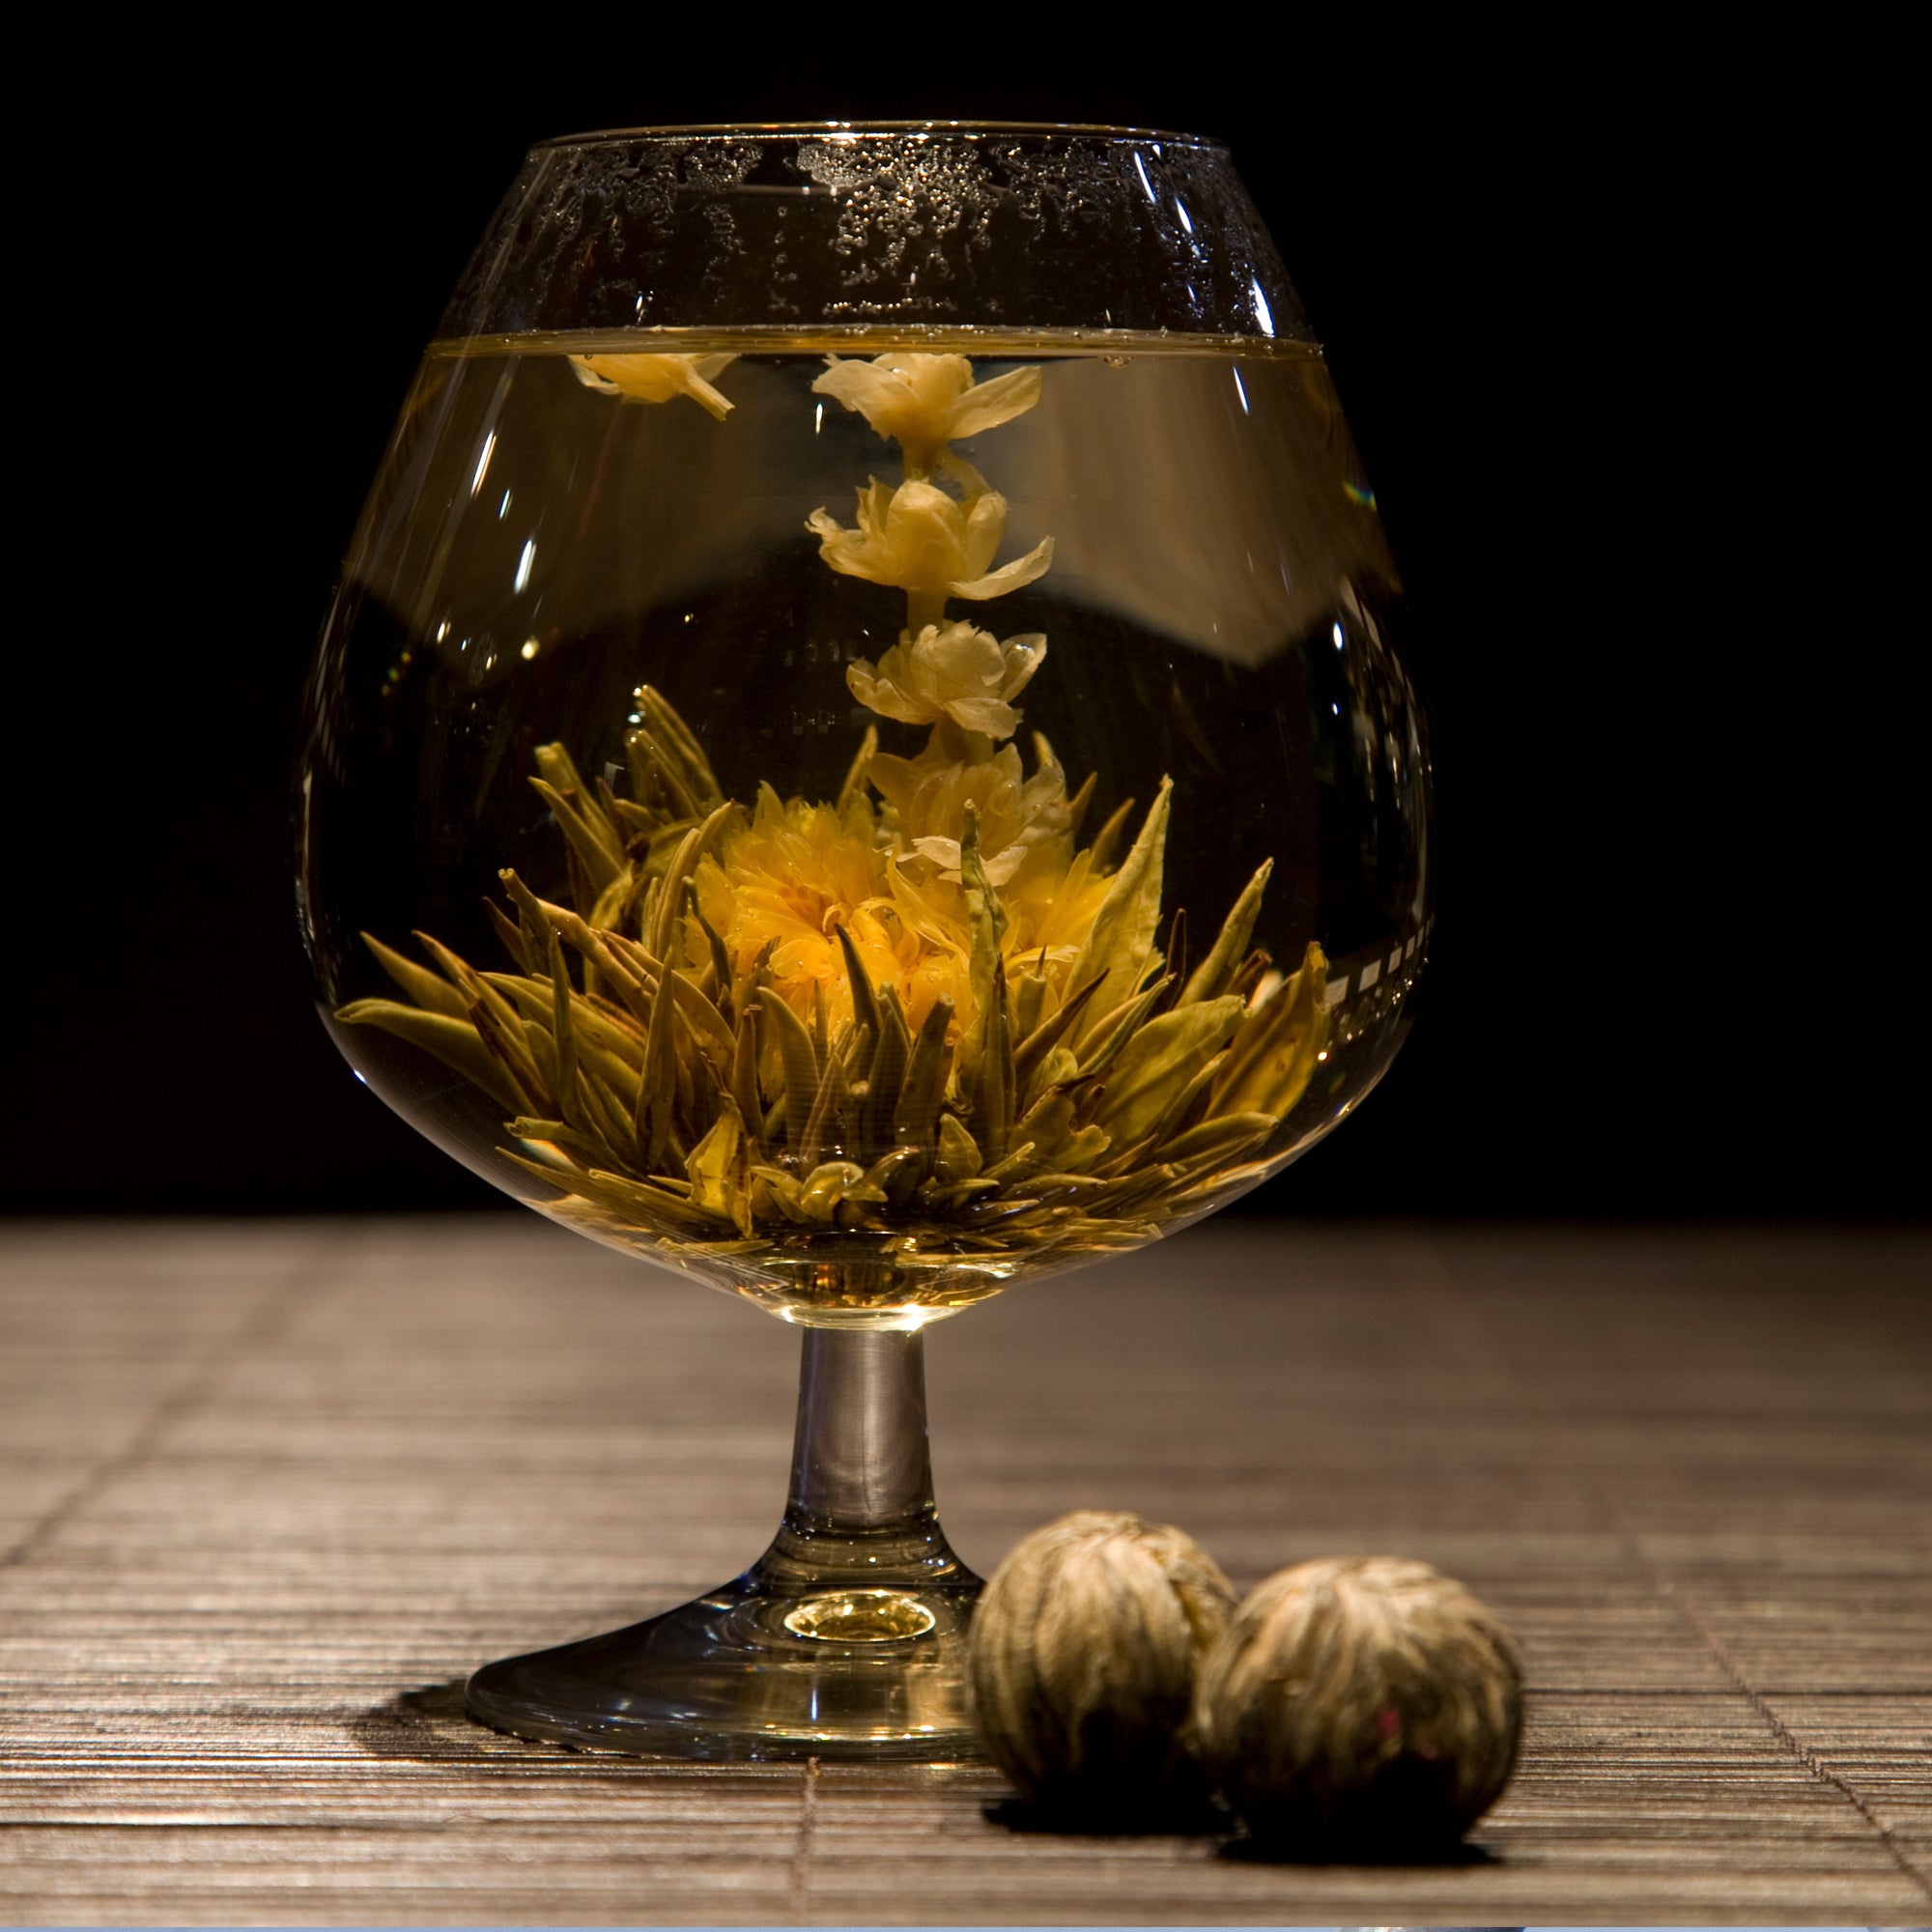 Hand-Tied Flowering Tea - Jasmine, Chrysanthmum and Green Tea